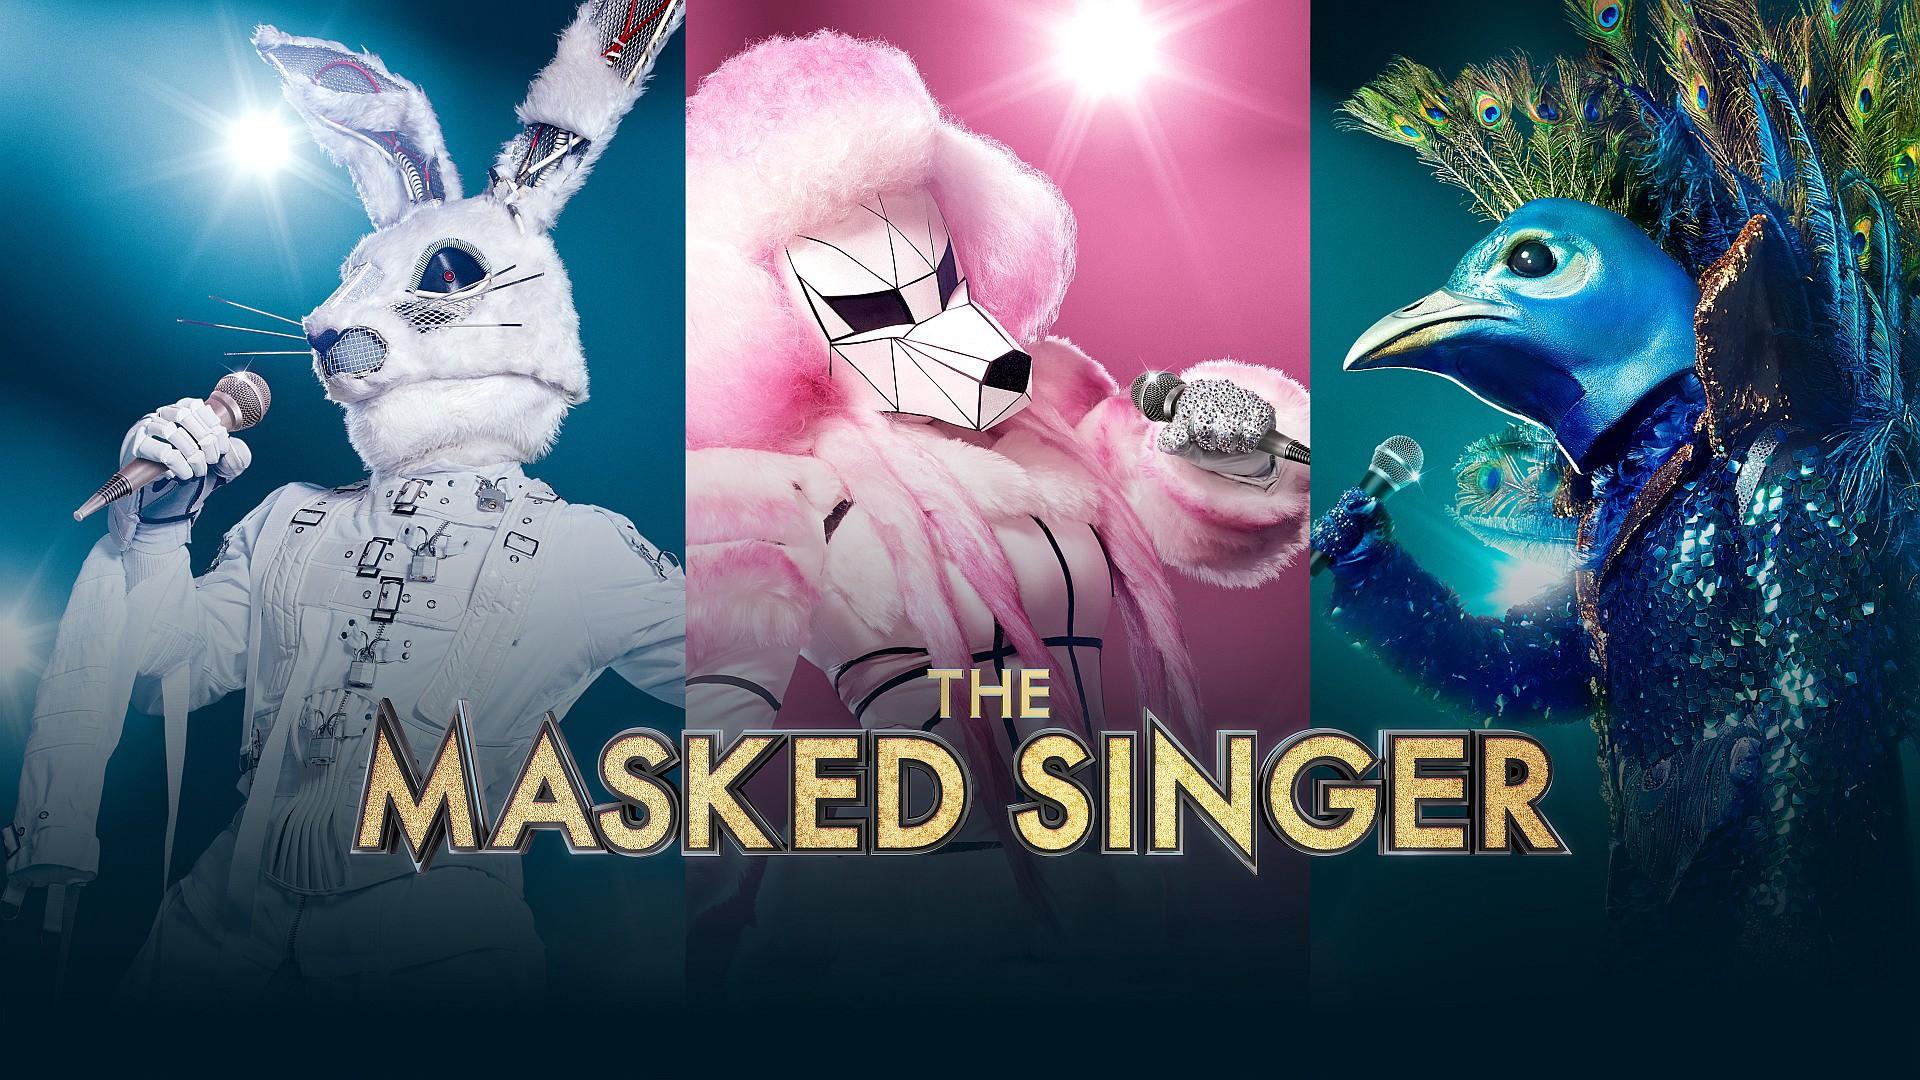 Watch [Full] The Masked Singer 2019 'Return of the Masks